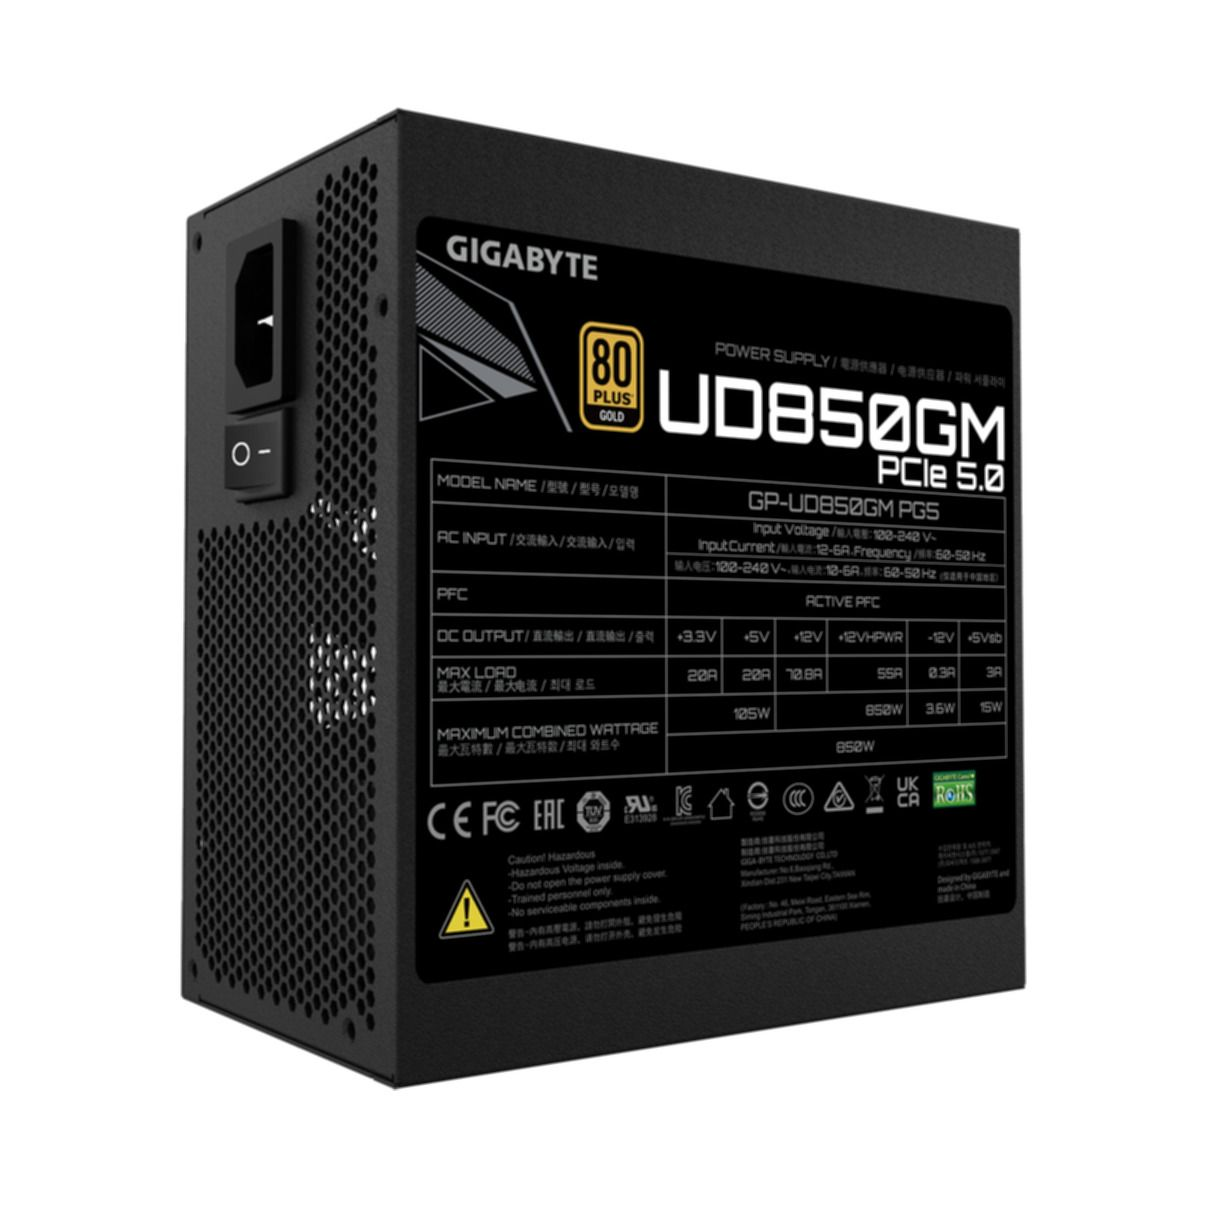 GIGABYTE GP-UD850GM PG5 PC Netzteil 850 Watt